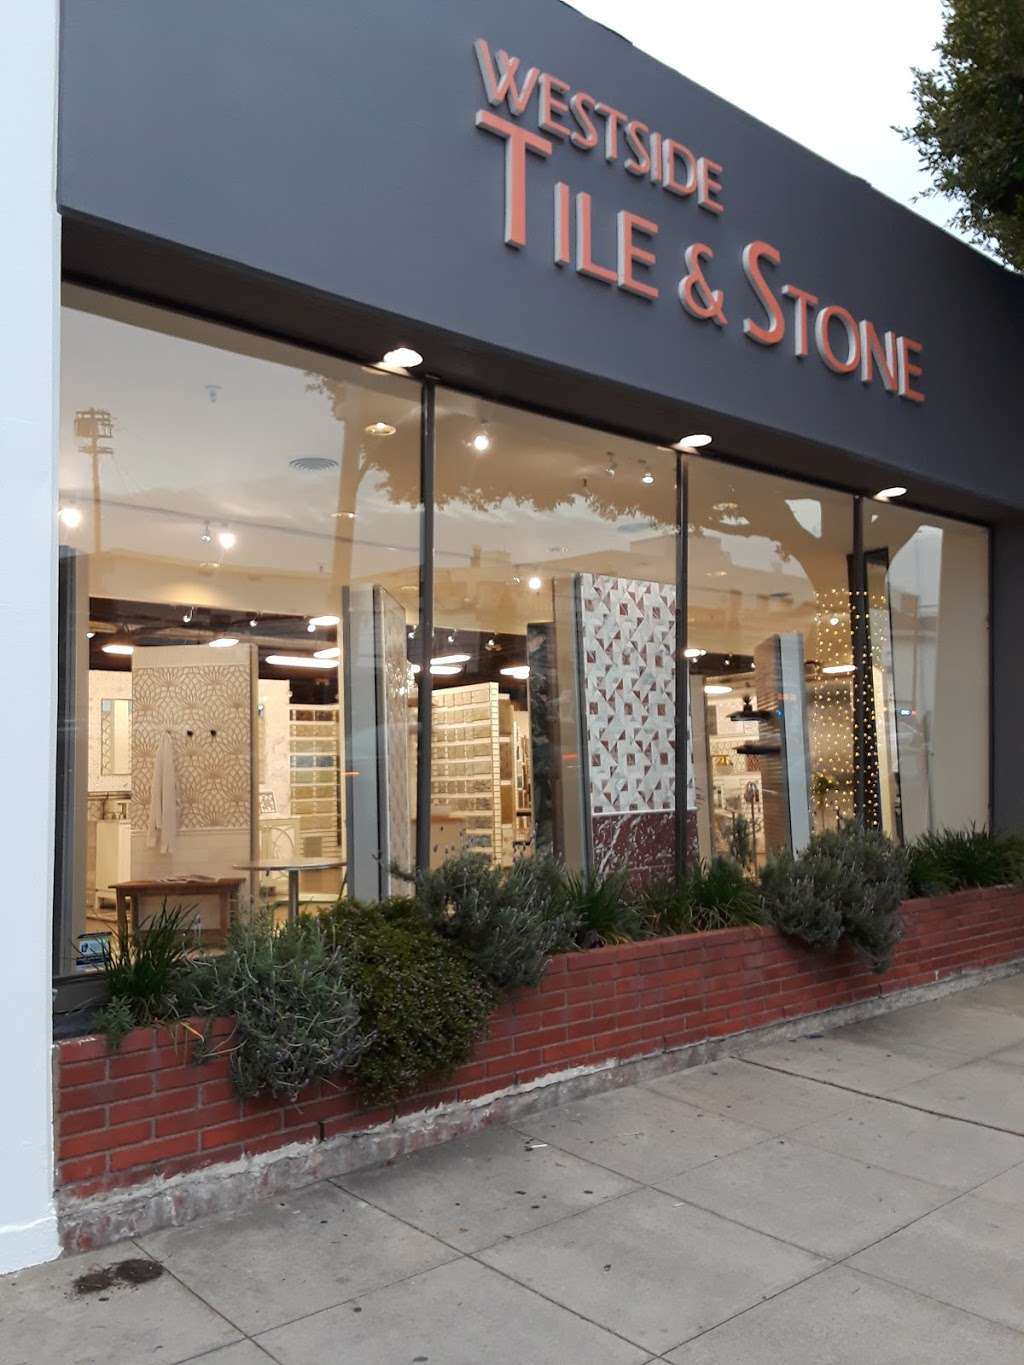 Tile Companies, Westside Tile and Stone, Entrance